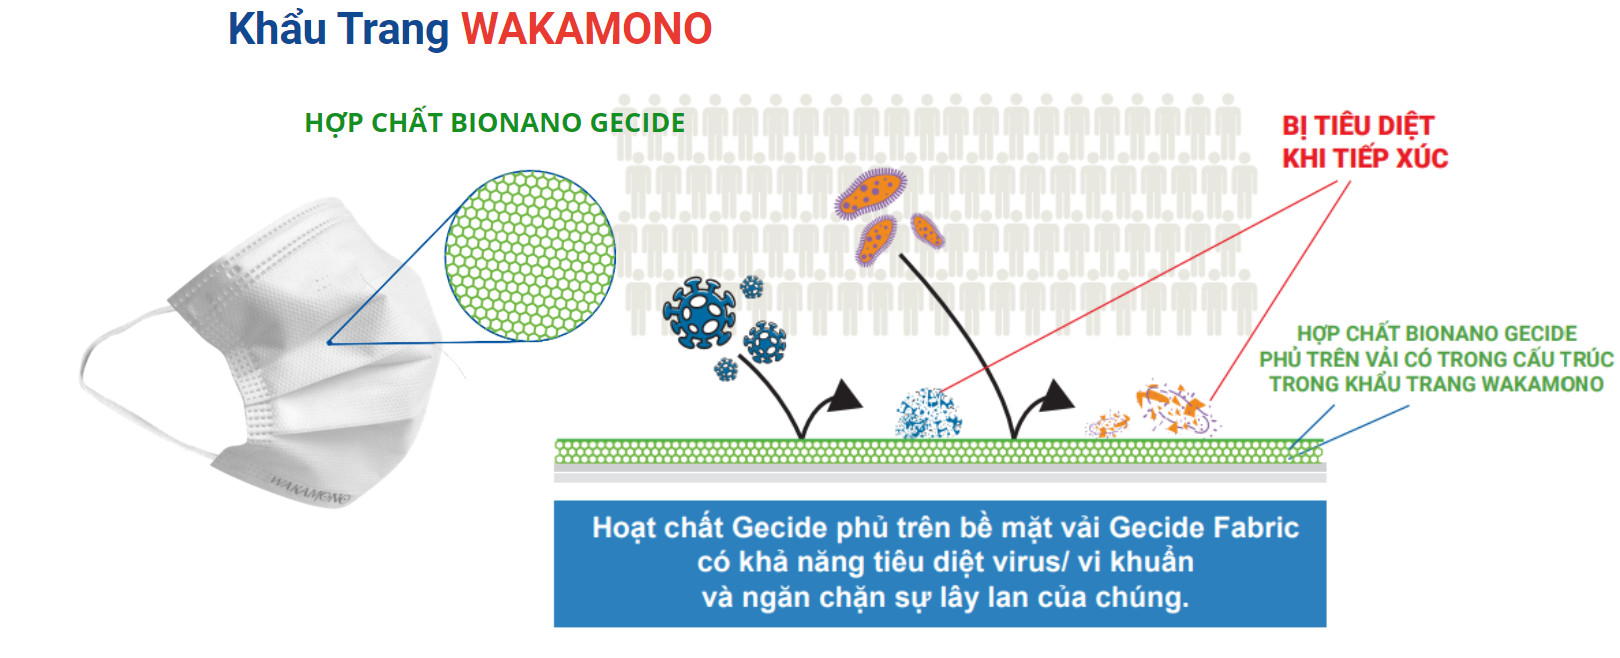 Cấu trúc khẩu trang y tế diệt khuẩn Wakamono